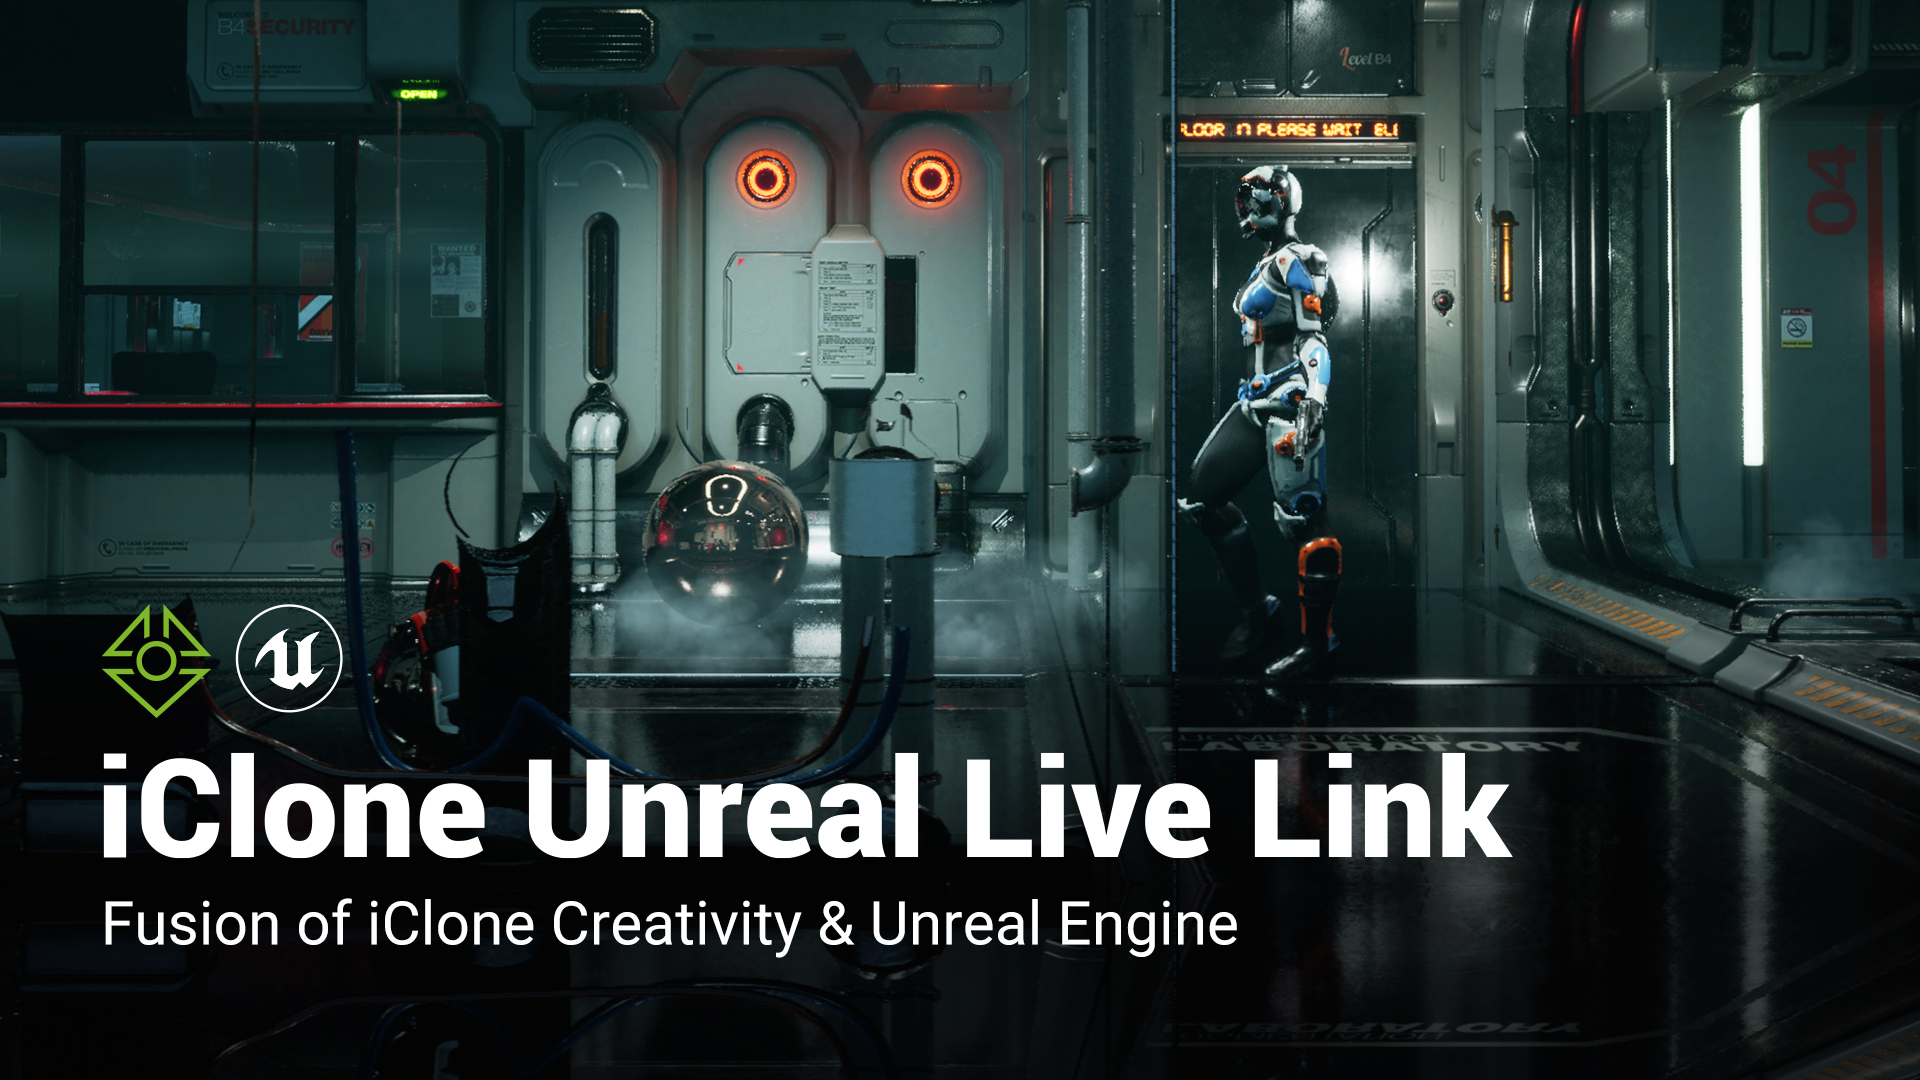 iClone Unreal Live Link screenshot - Key Image